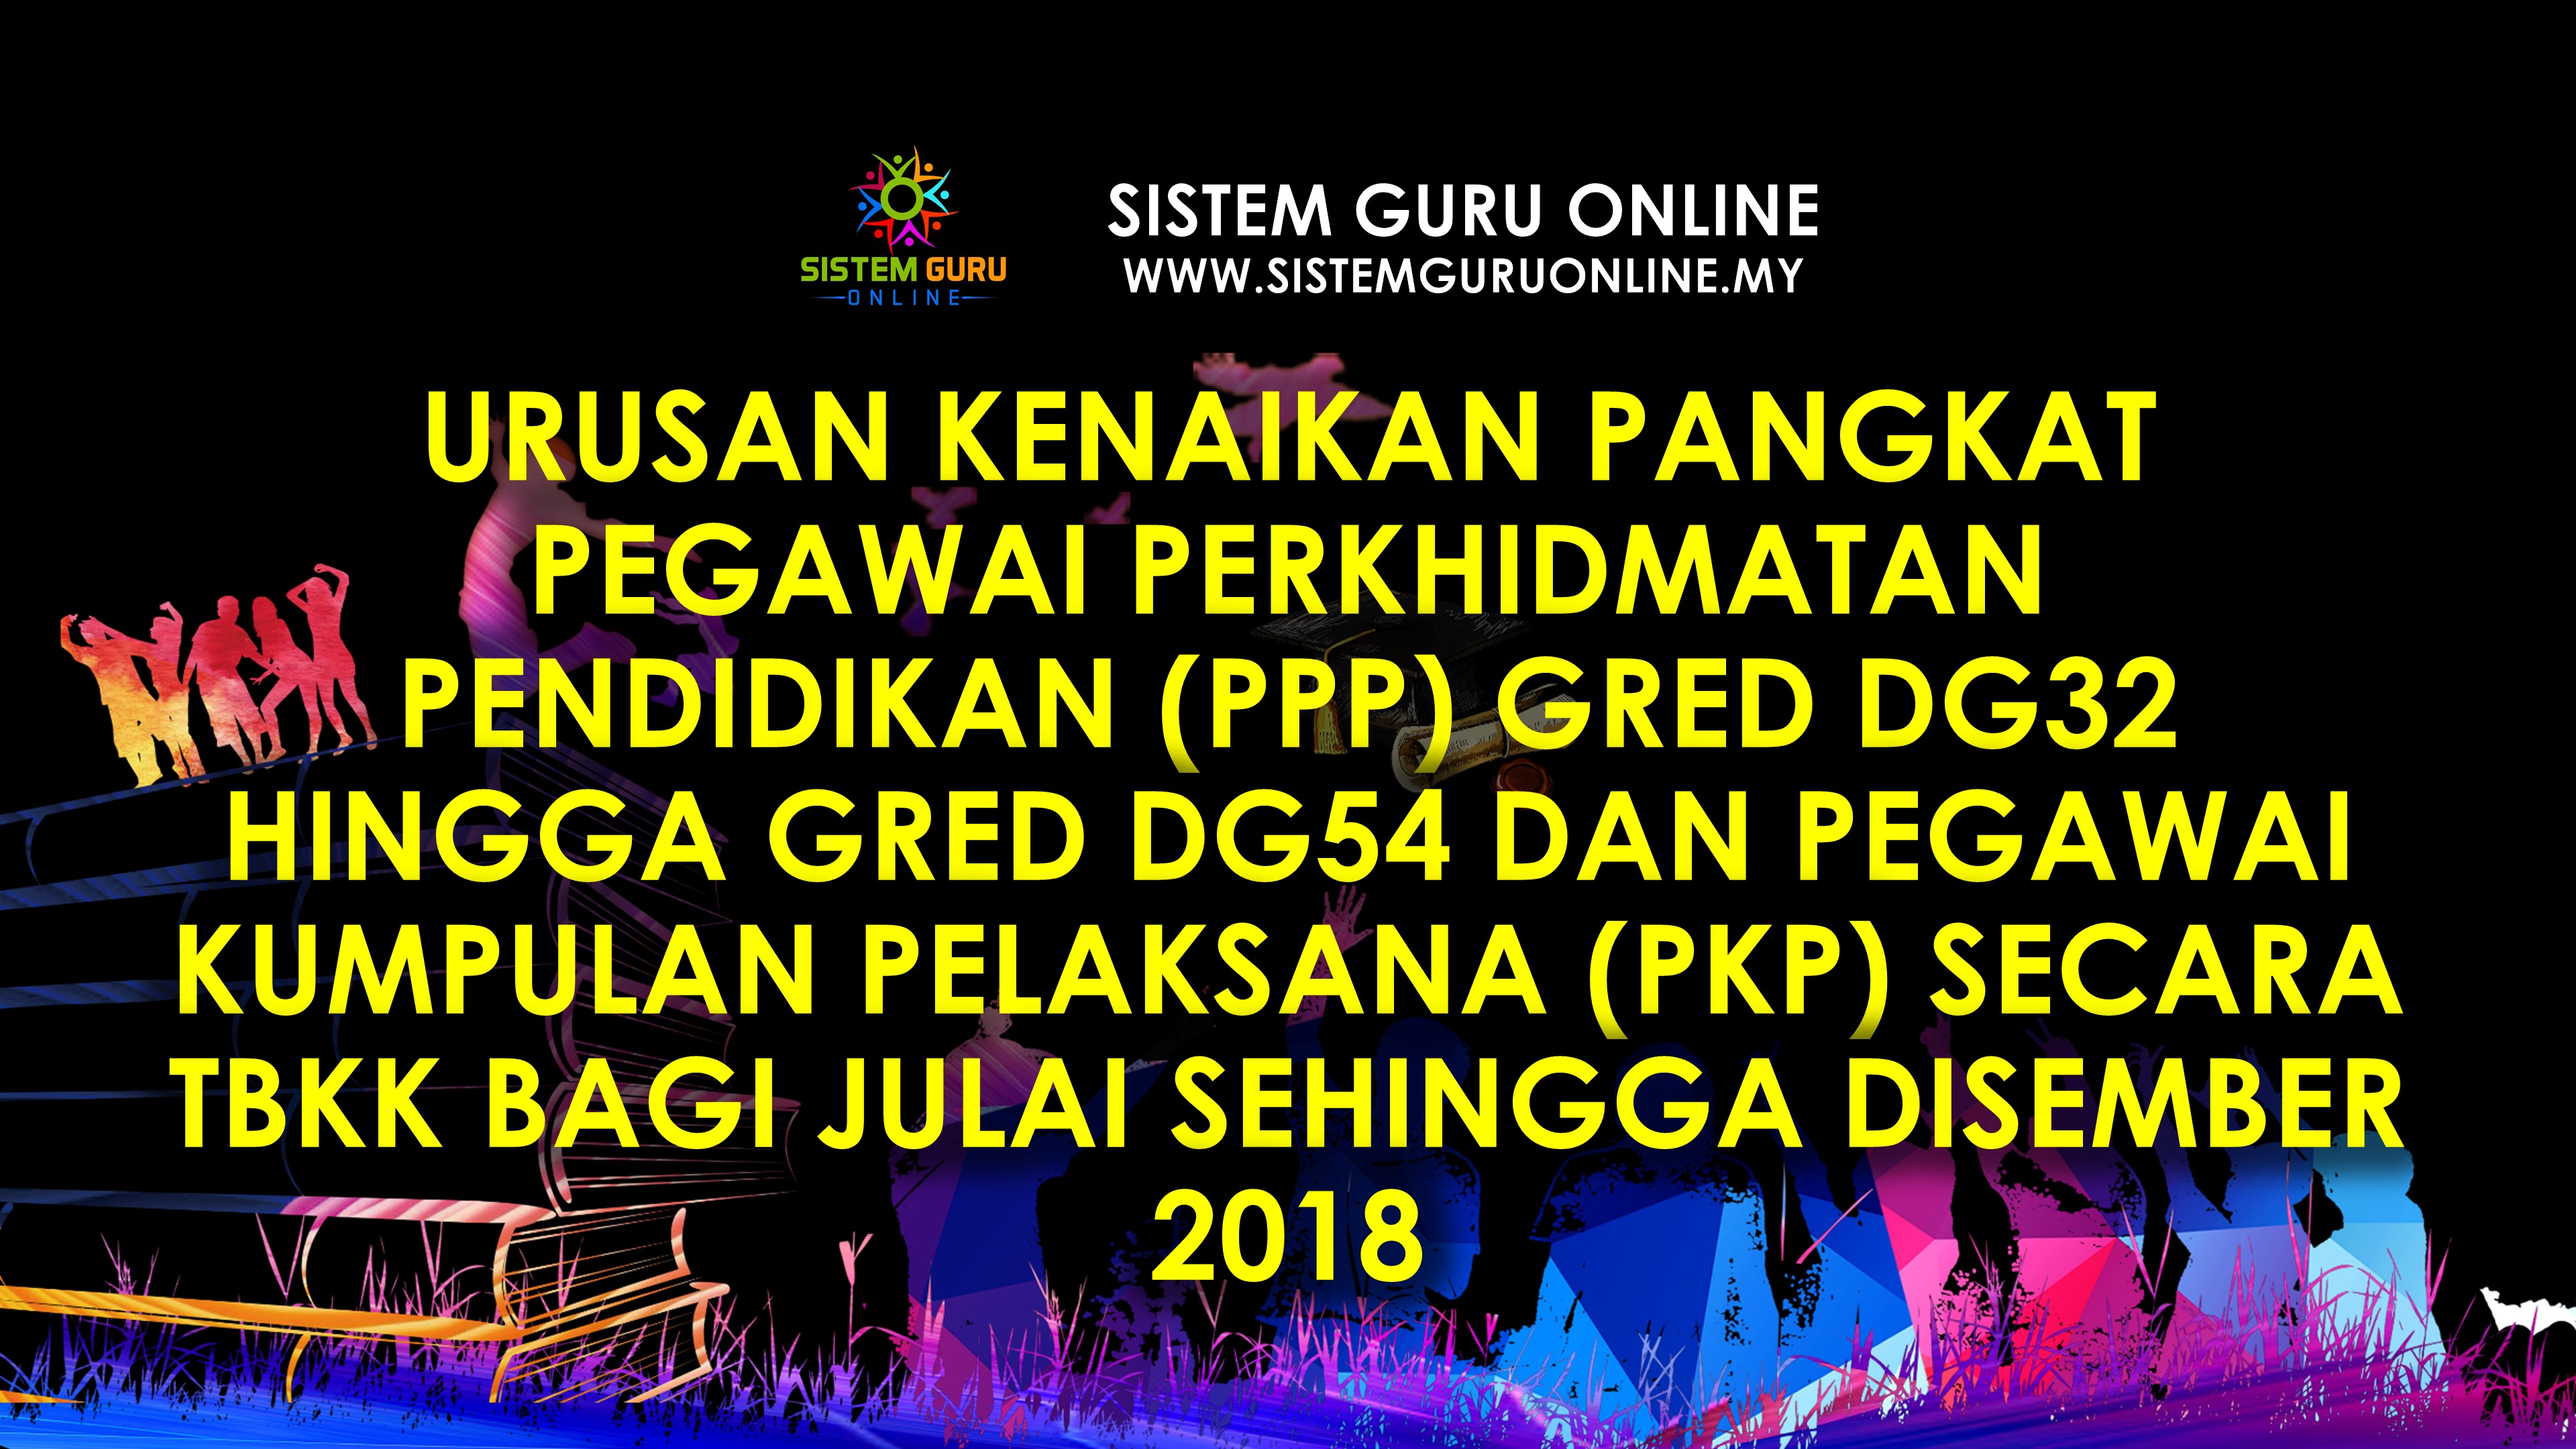 Soalan Upsr 2019 Online - Selangor k